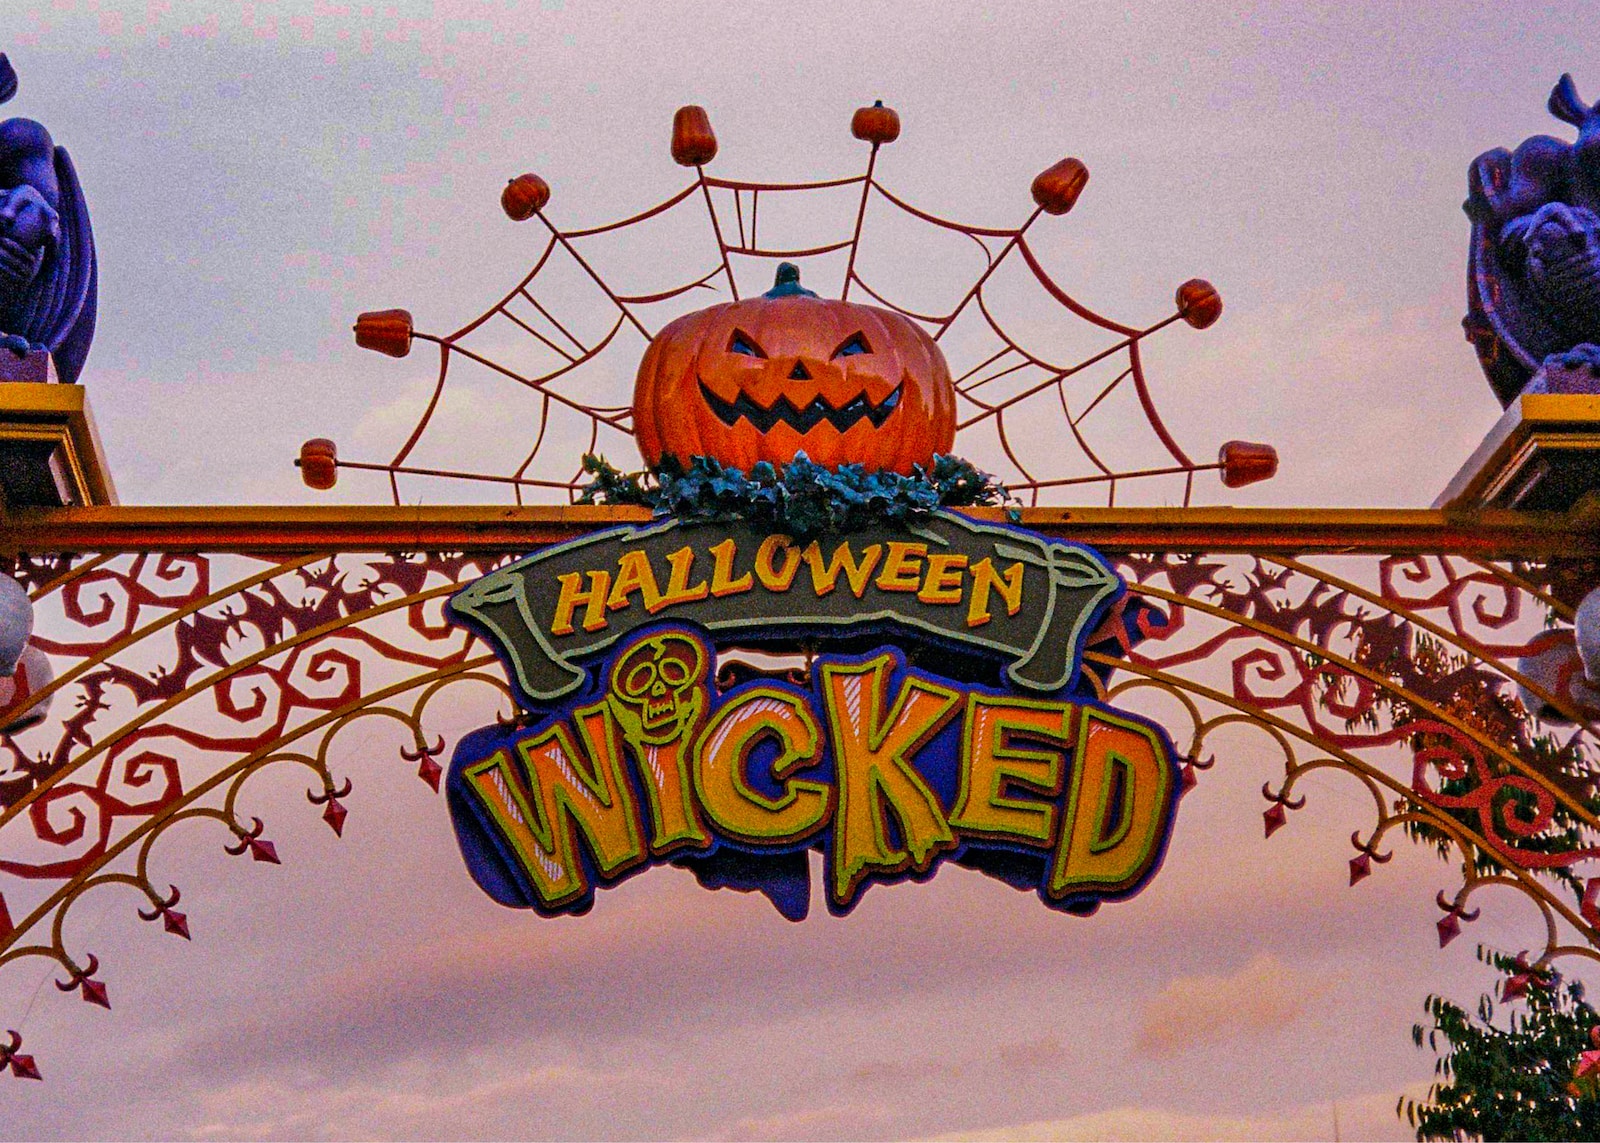 a sign for a halloween themed amusement park